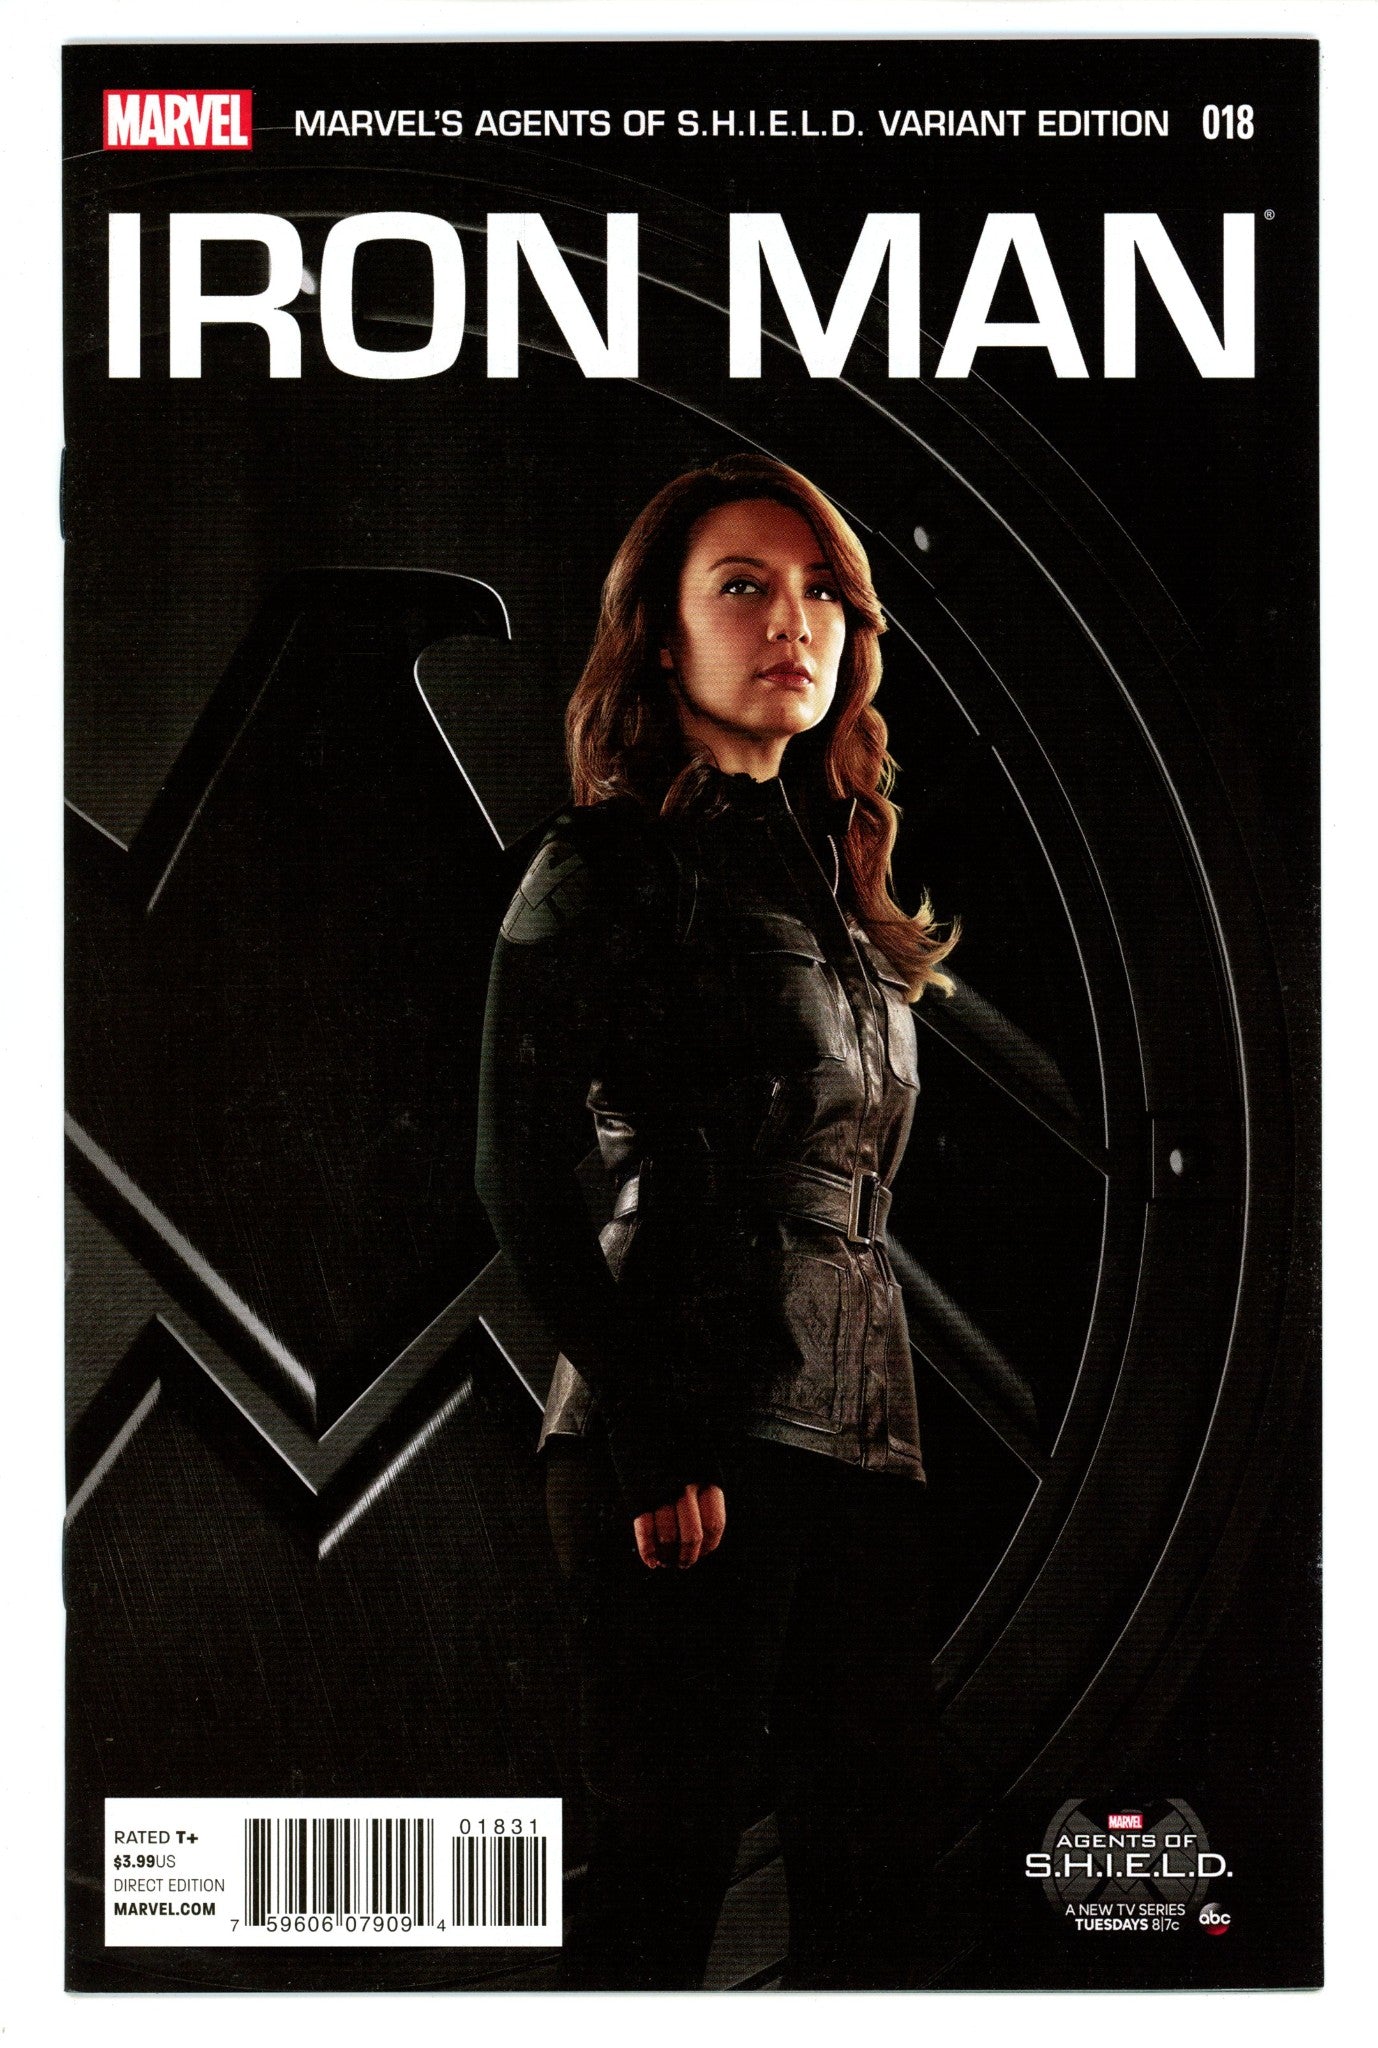 Iron Man Vol 5 18 NM (9.4) (2014) Photo Variant 